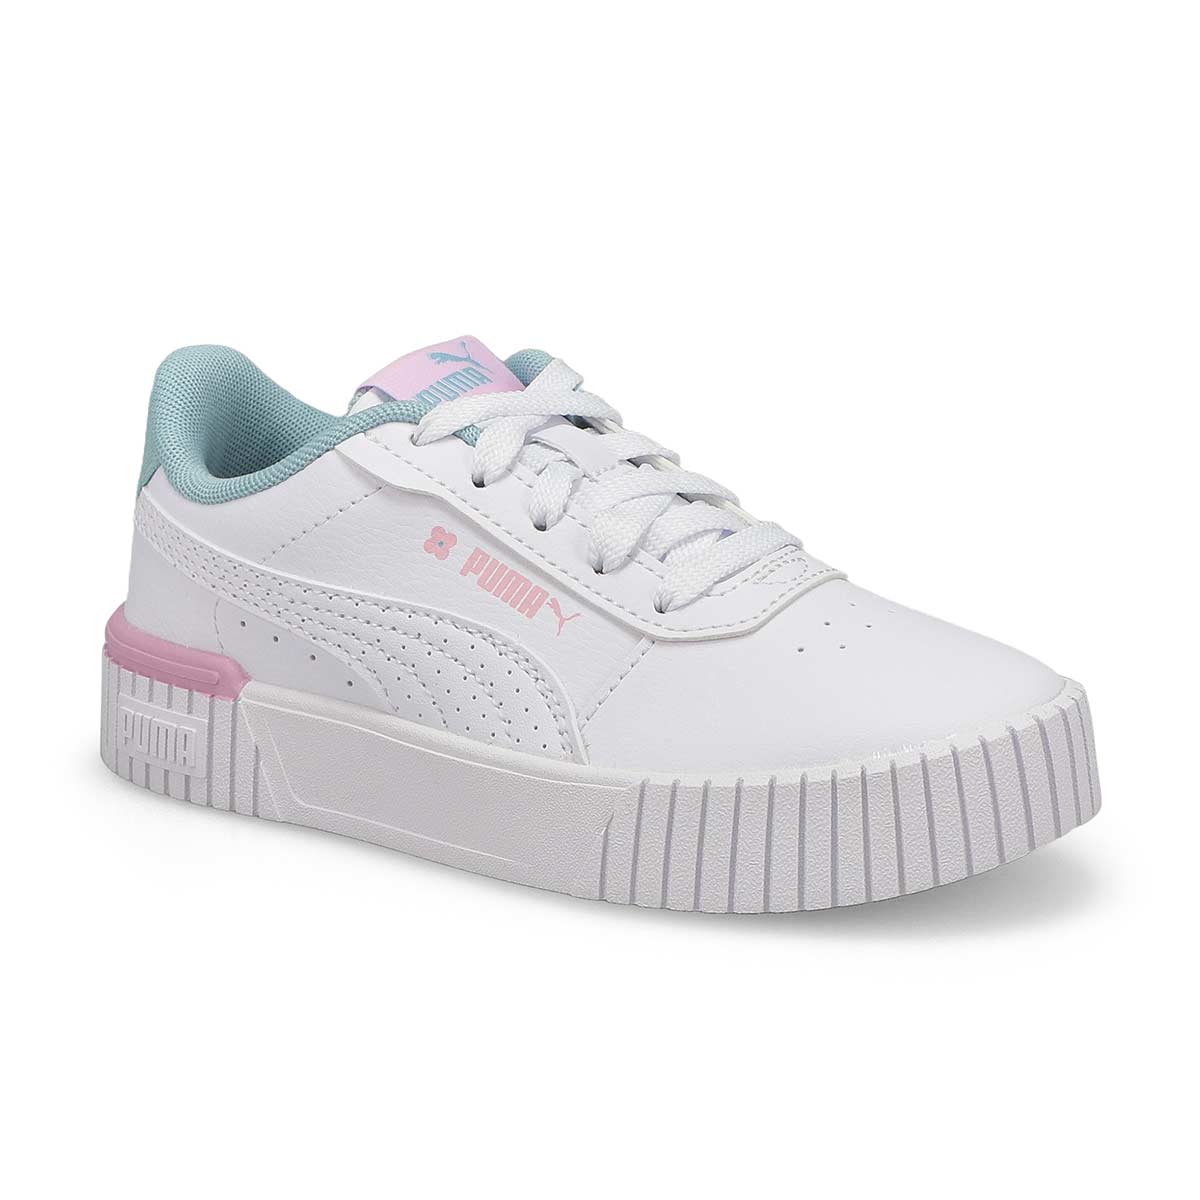 Girls'  Carina 2.0 Tropical Ps Sneaker - White/Turquoise/Grape